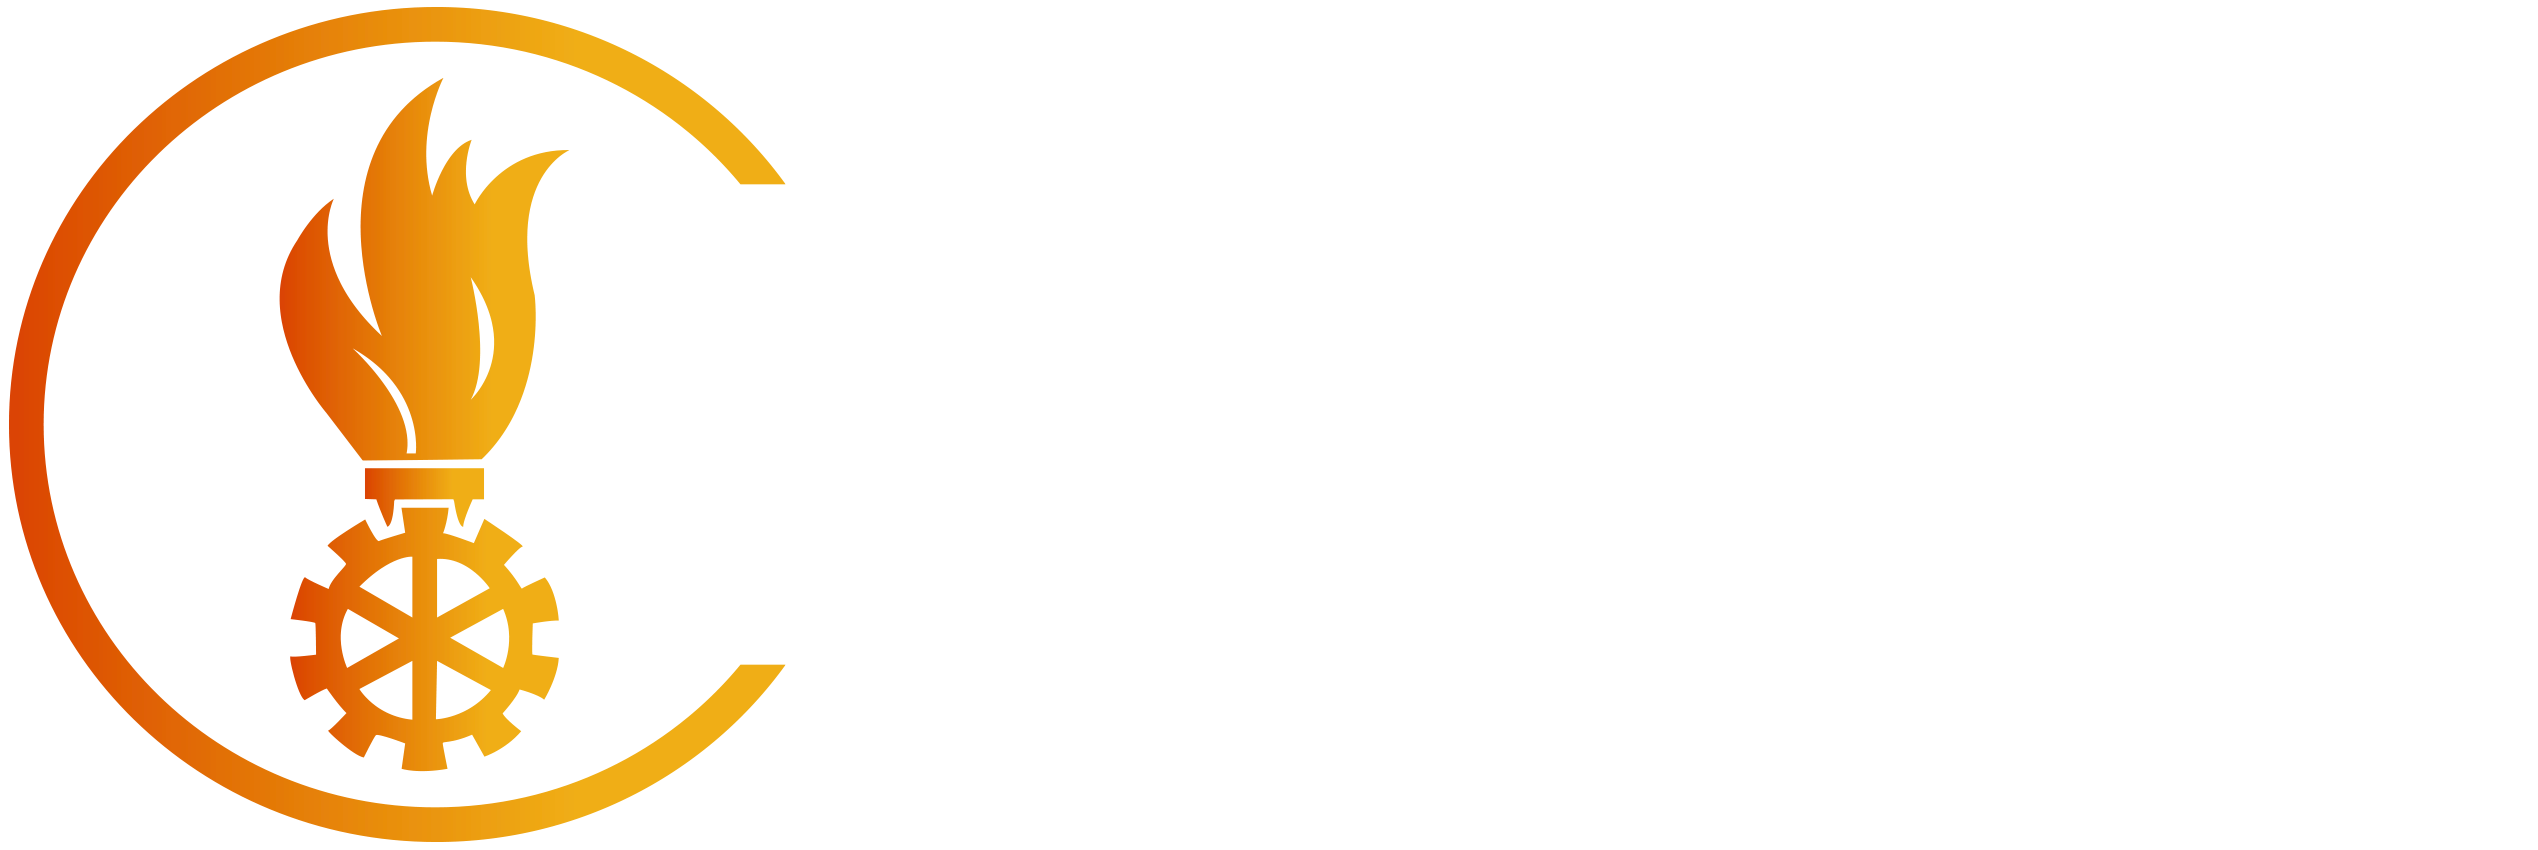 FF Sankt Georgen an der Gusen logo